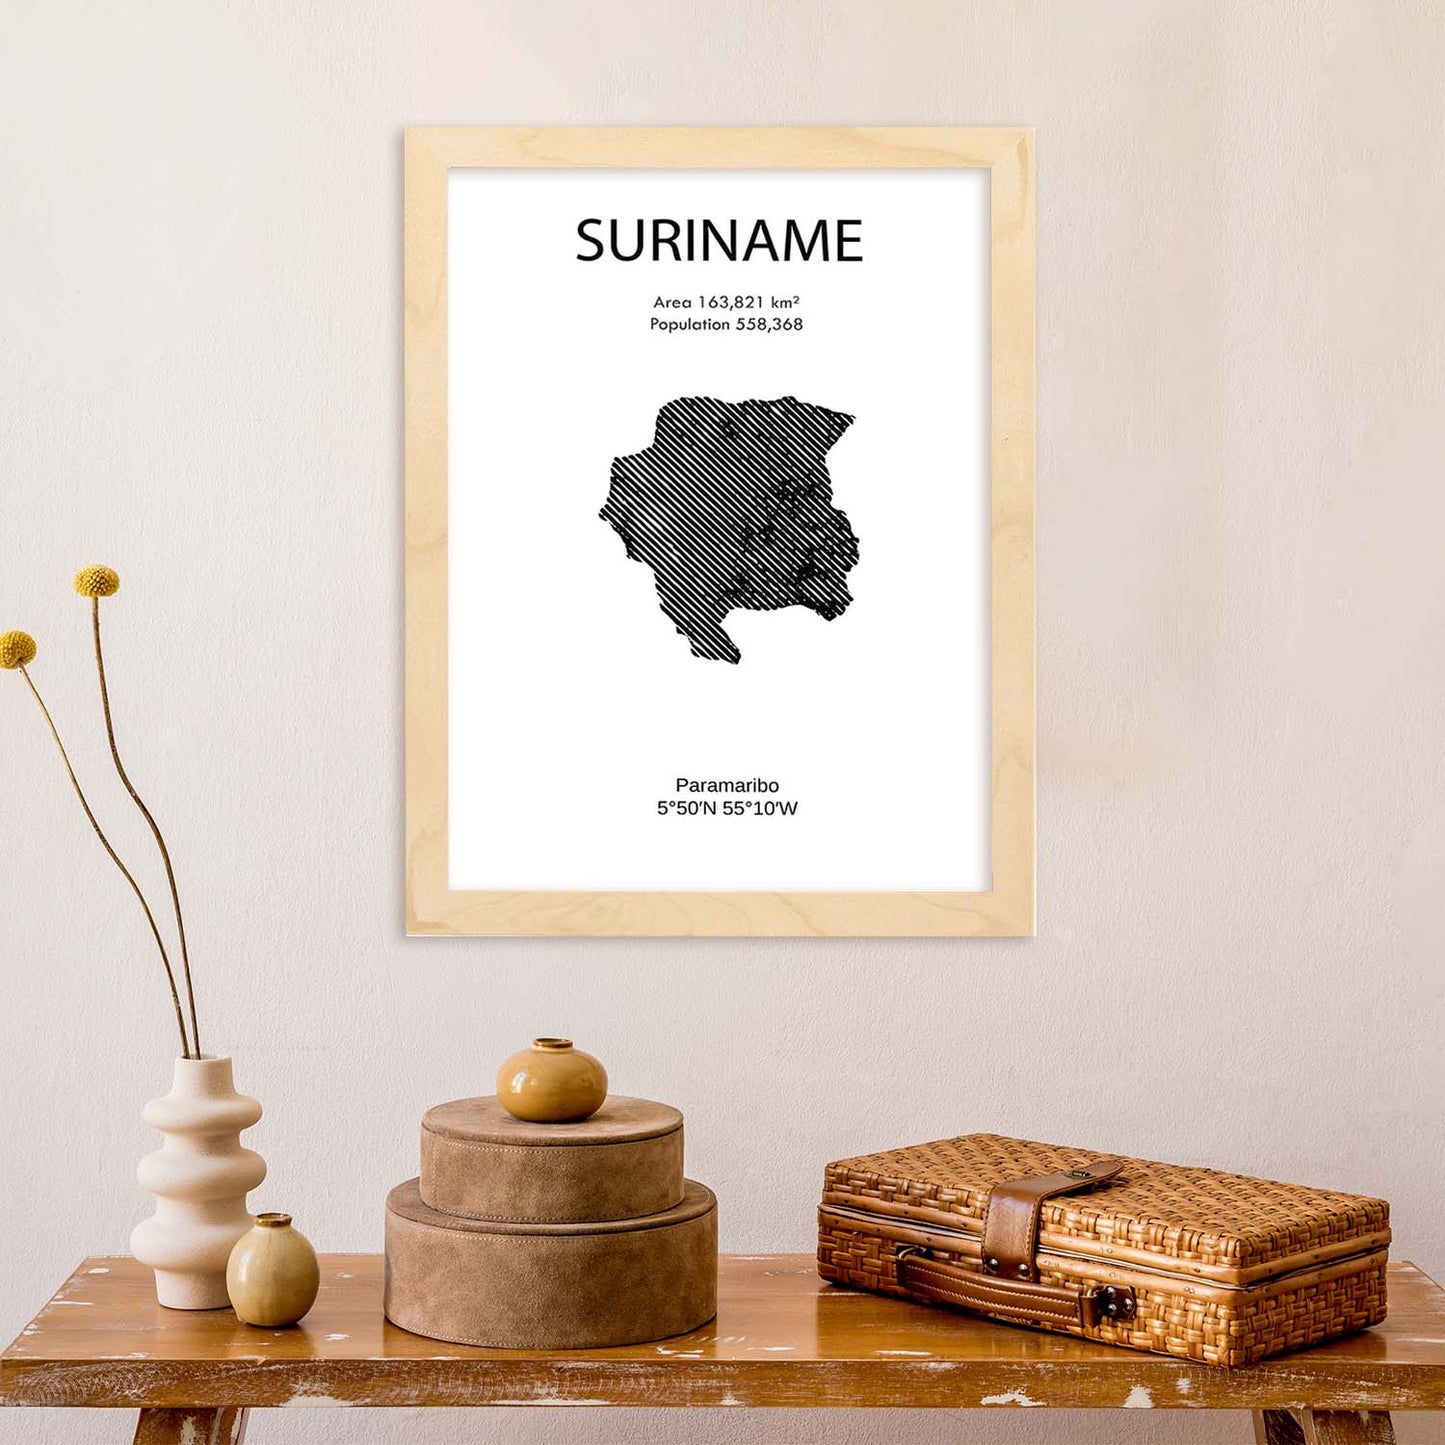 Poster de Surinam. Láminas de paises y continentes del mundo.-Artwork-Nacnic-Nacnic Estudio SL